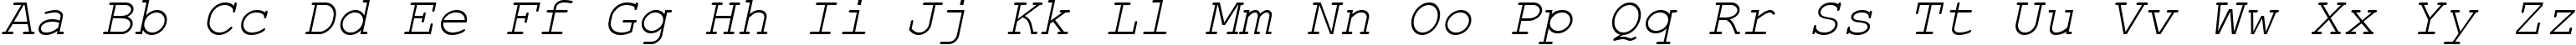 Пример написания английского алфавита шрифтом CourtierC Italic